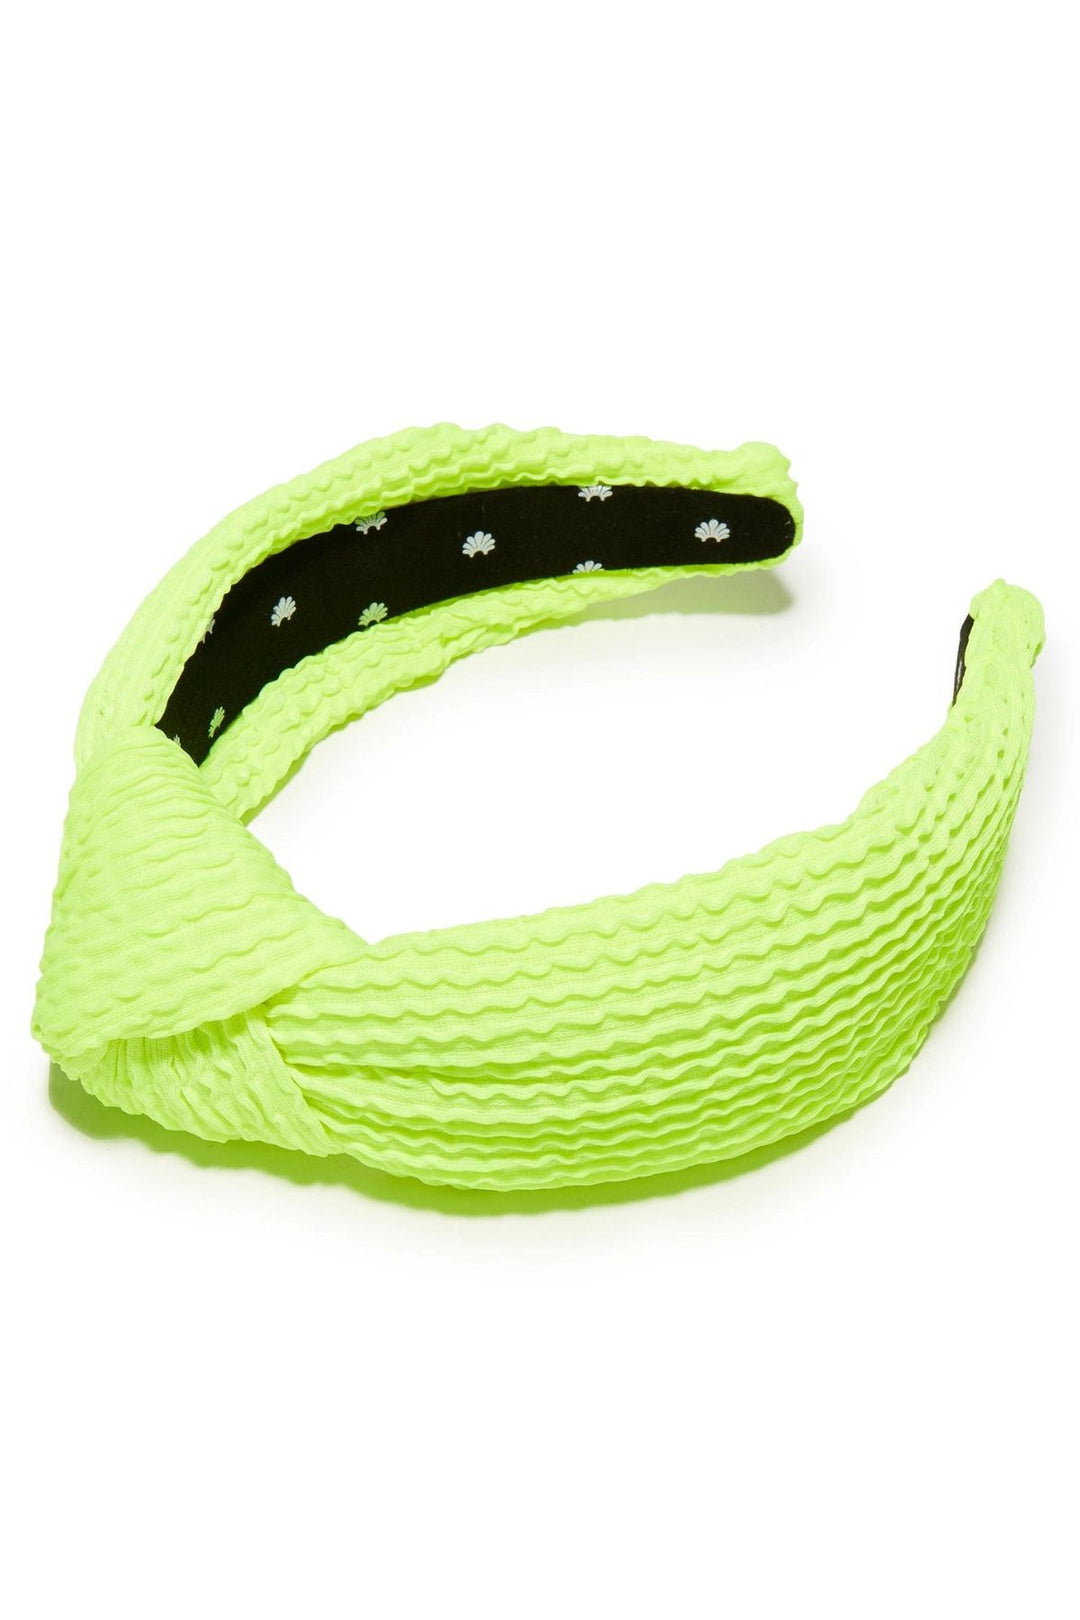 LELE SADOUGHI: Chartreuse Swimmer Knotted Headband